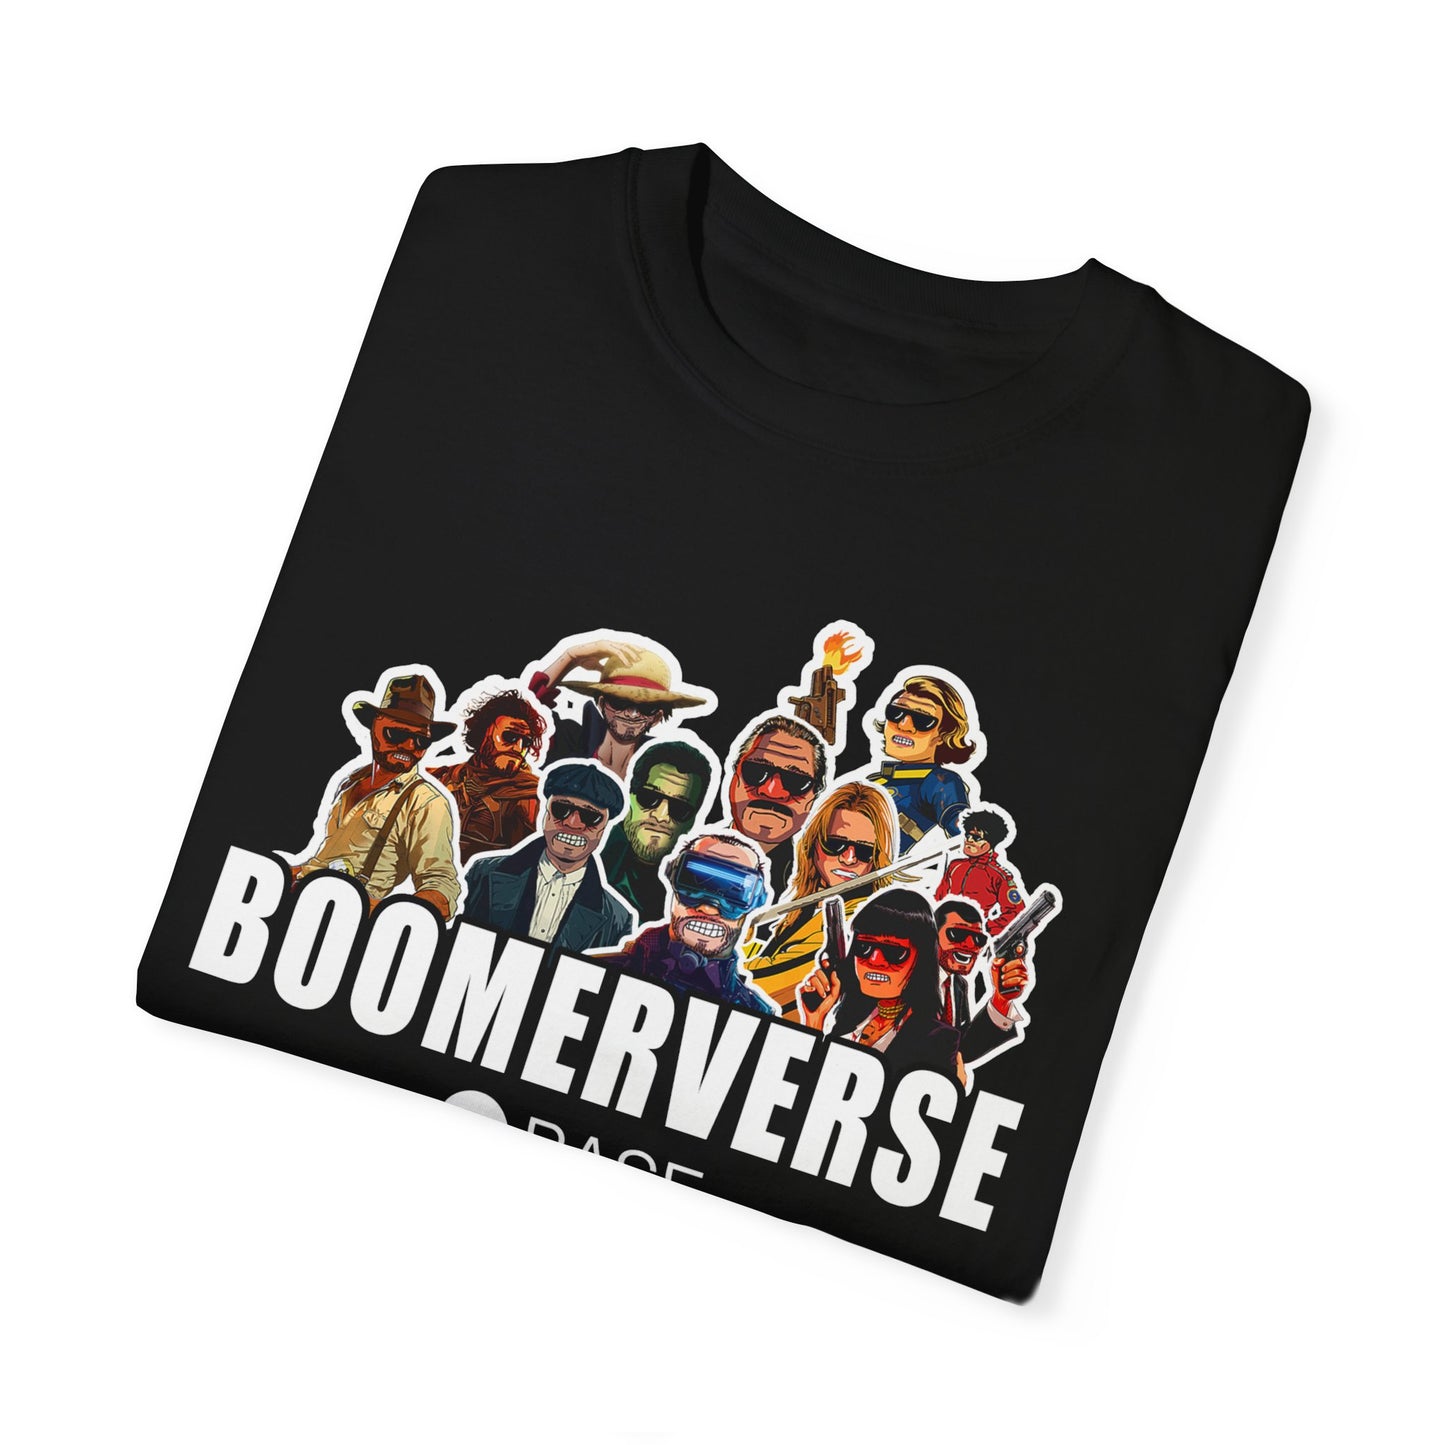 Boomerverse T-shirt (Black)